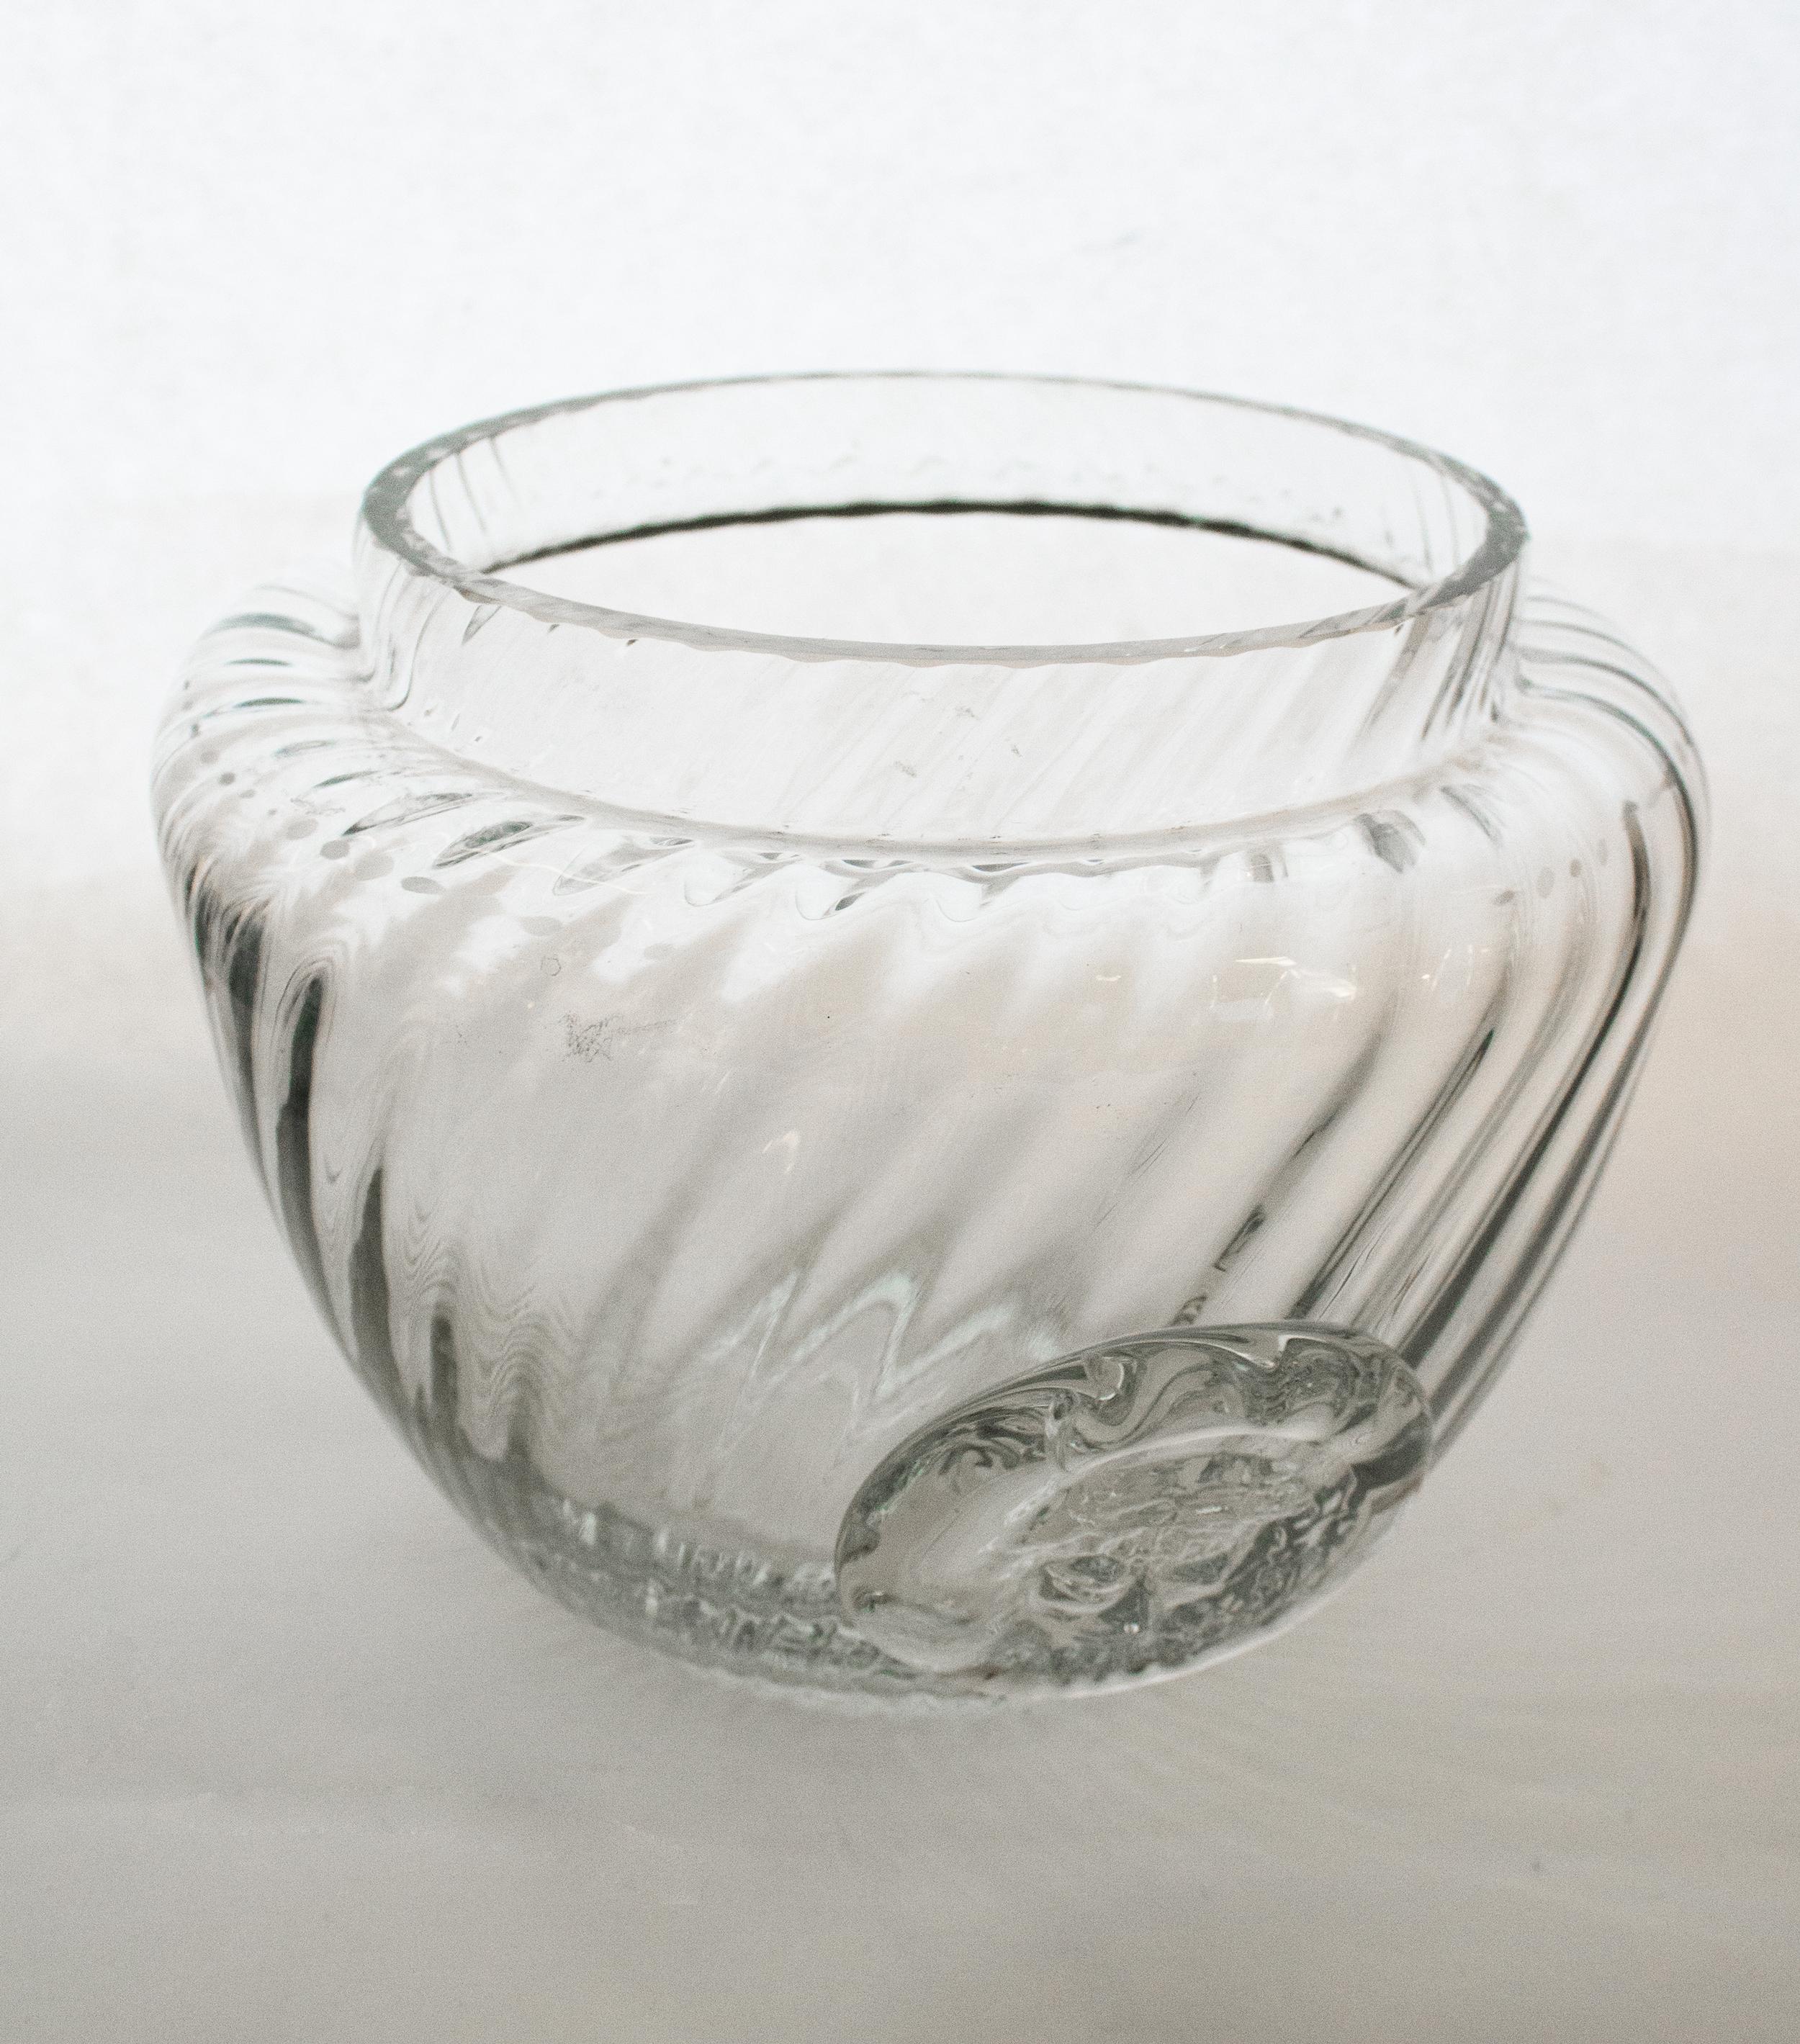 Scandinavian Modern Large Turbine Glass Bowl Signed by the Swedish Glass Artist Erik Höglund, 1980 For Sale